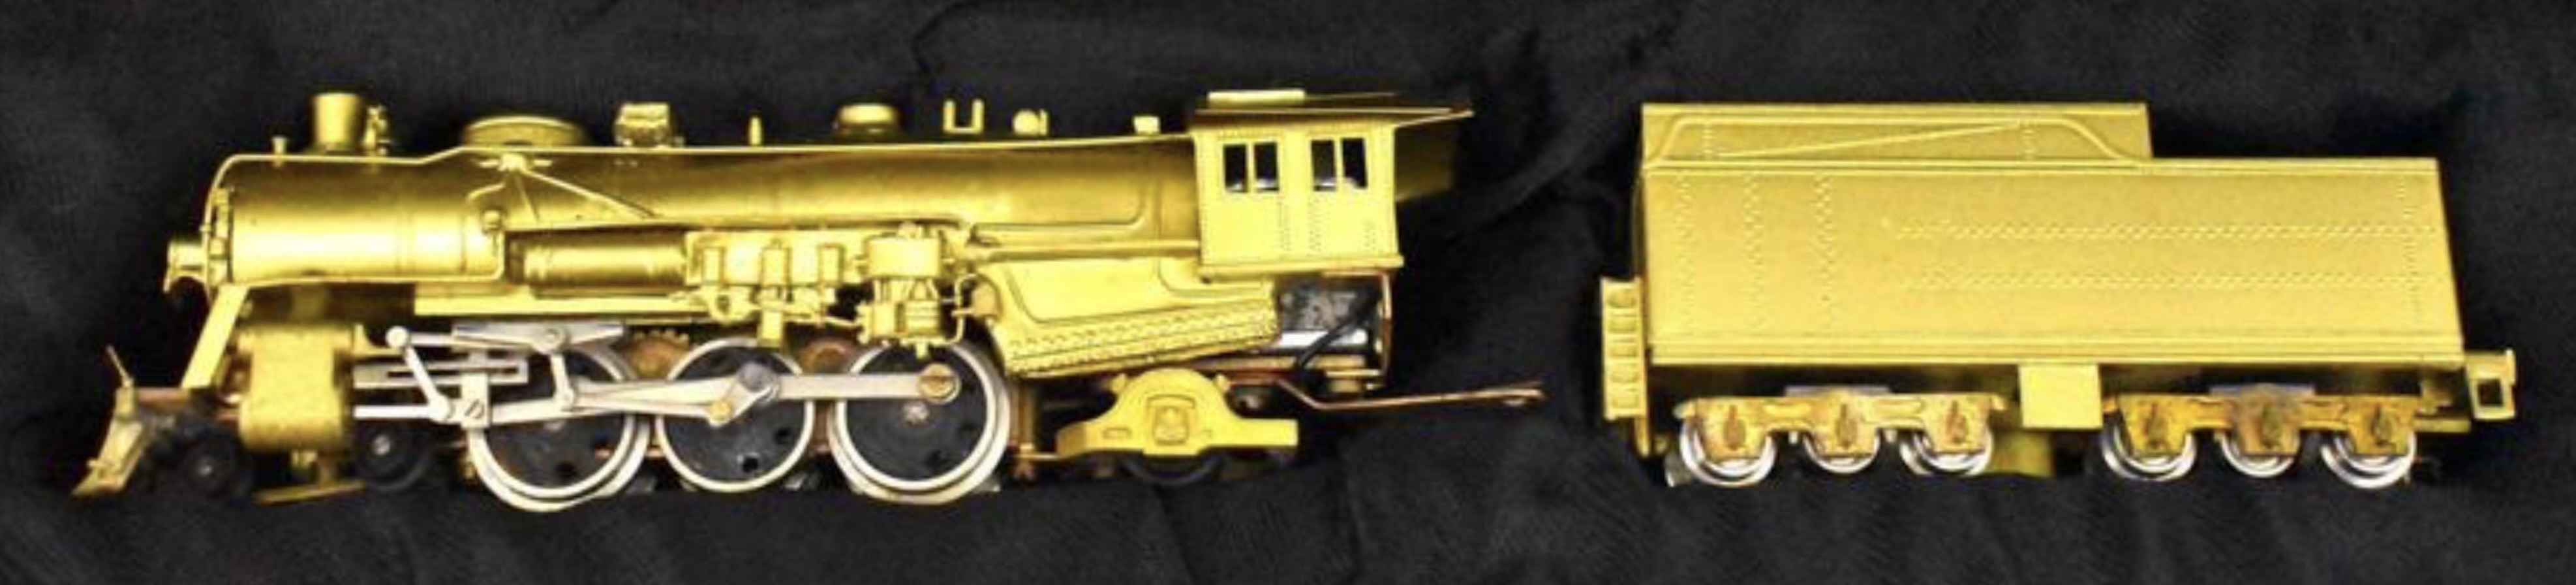 N Scale - Jamco Limited - 001 - Locomotive, Steam, Brass, 4-6-2, USRA - Union Pacific